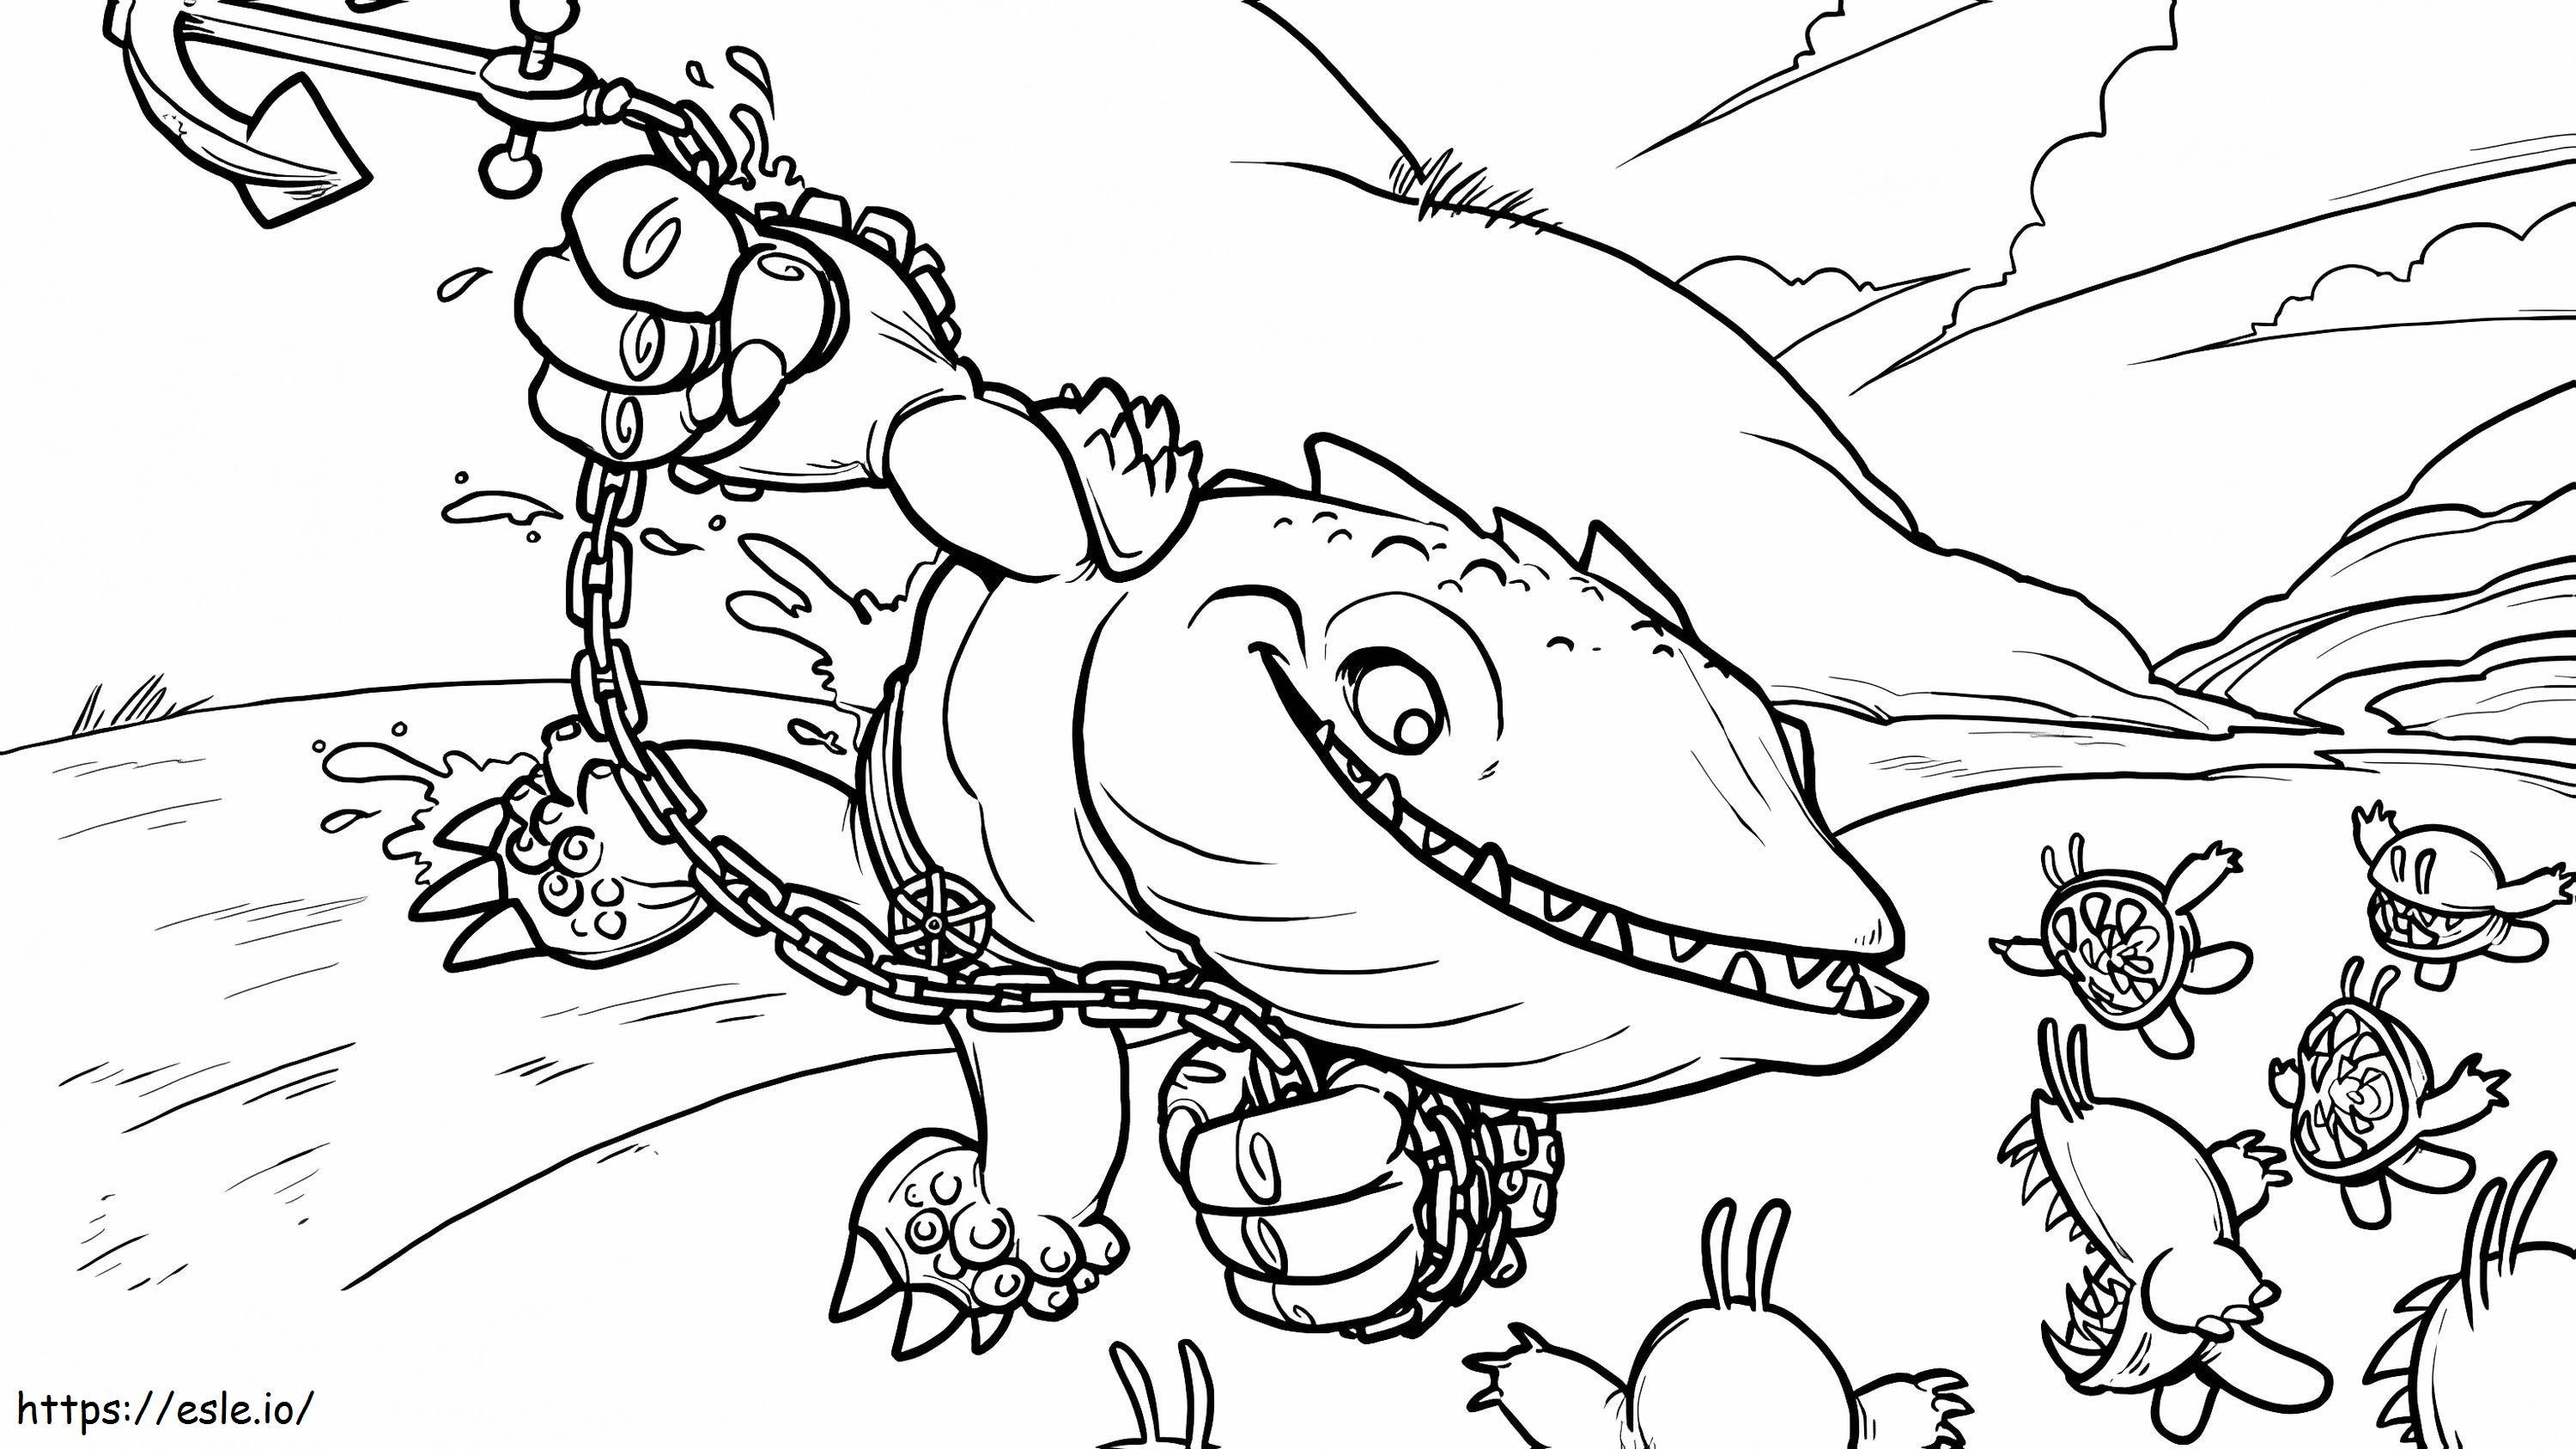 Thumpback In Skylander Giants coloring page